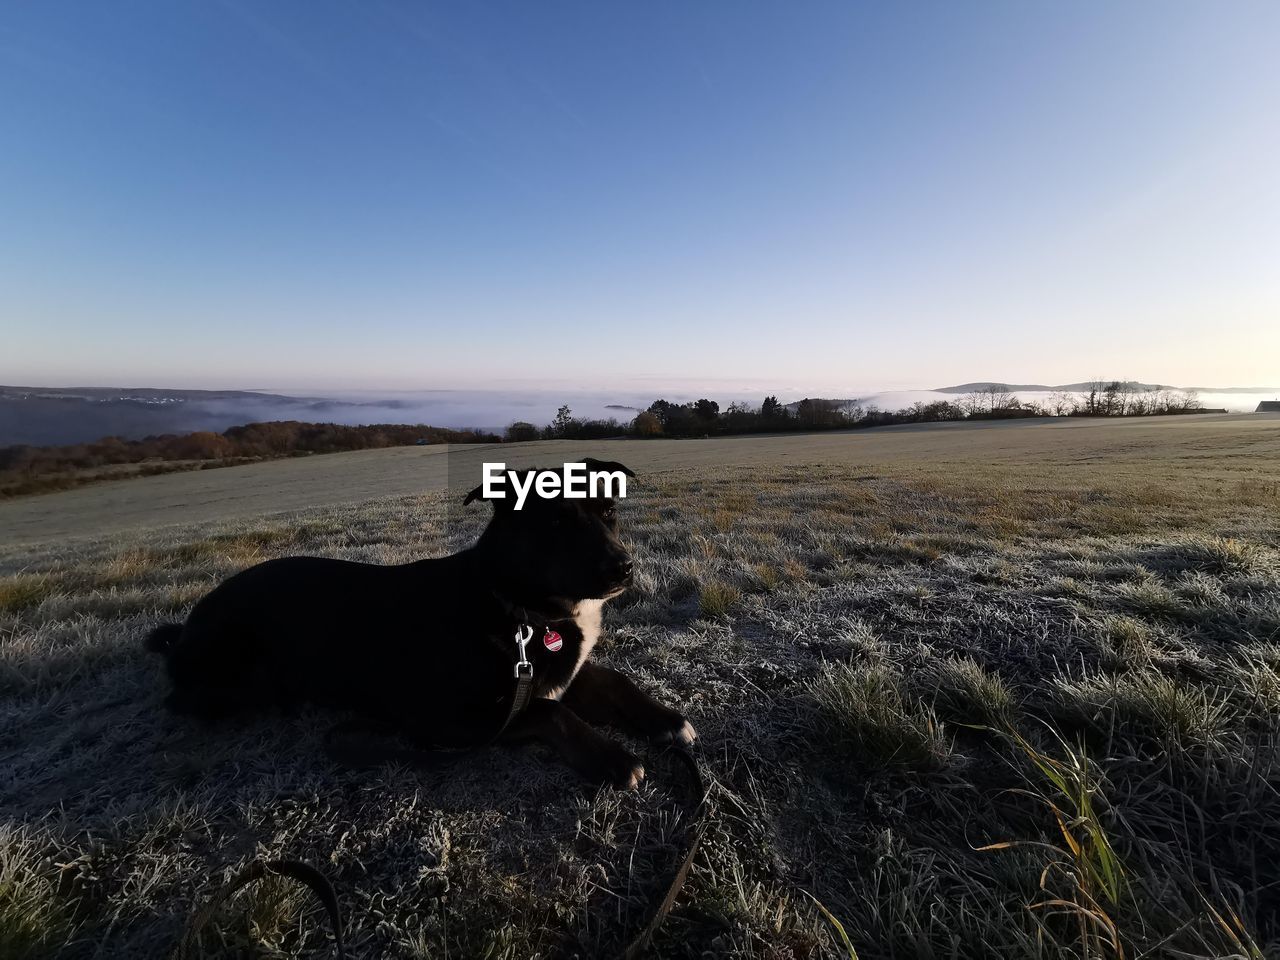 BLACK DOG STANDING ON FIELD